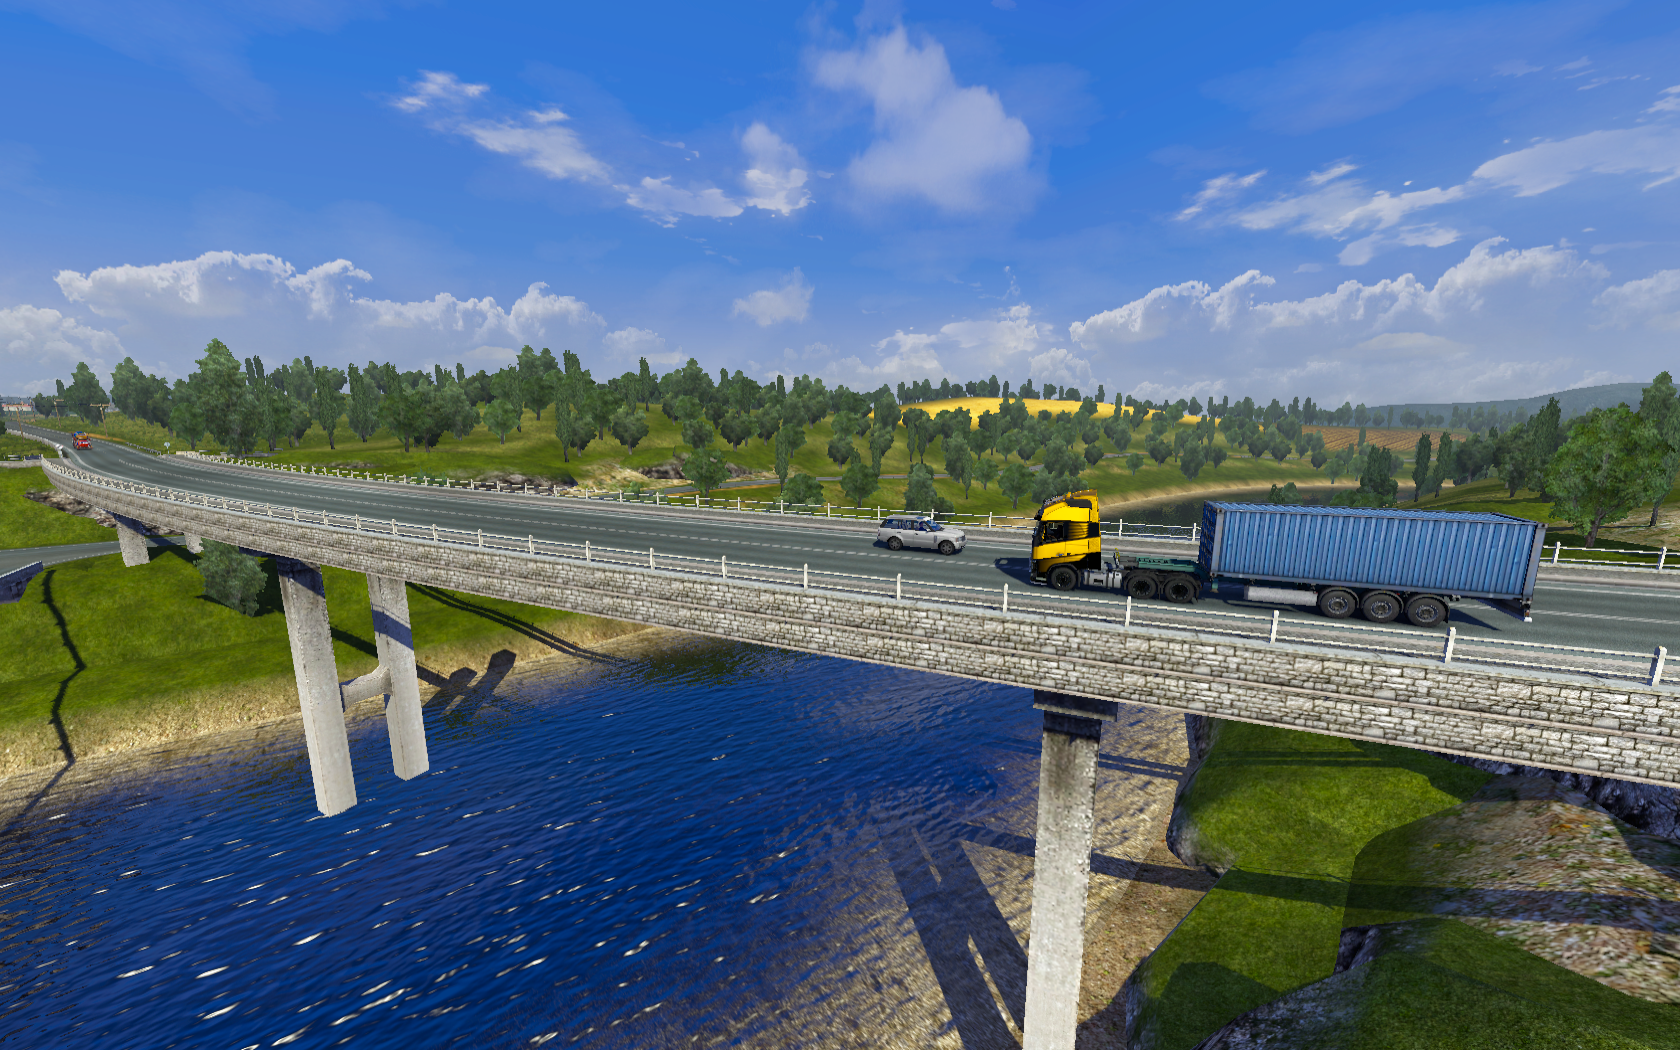 Мост над рекой в игре Euro Truck Simulator 2